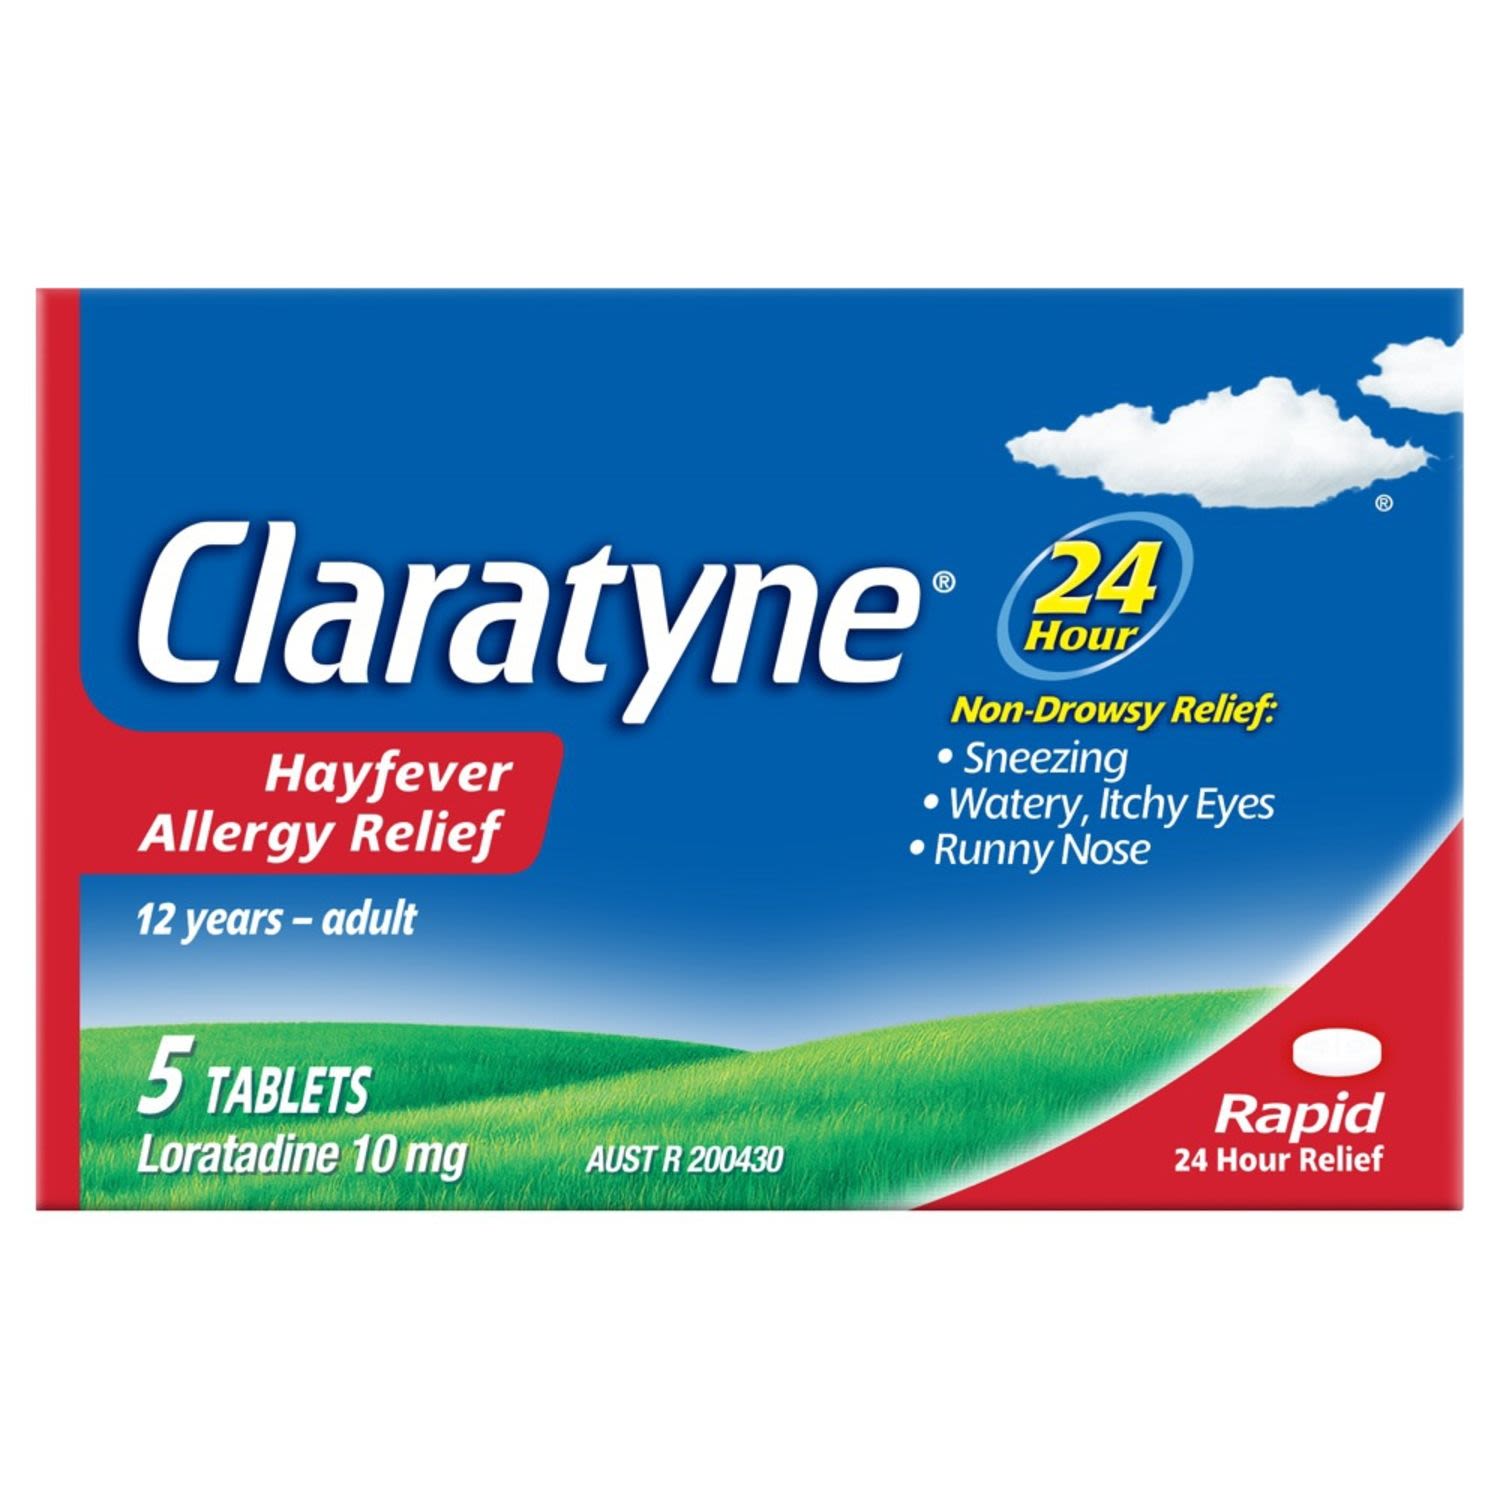 Claratyne Hayfever Allergy Relief Antihistamine Tablets, 5 Each